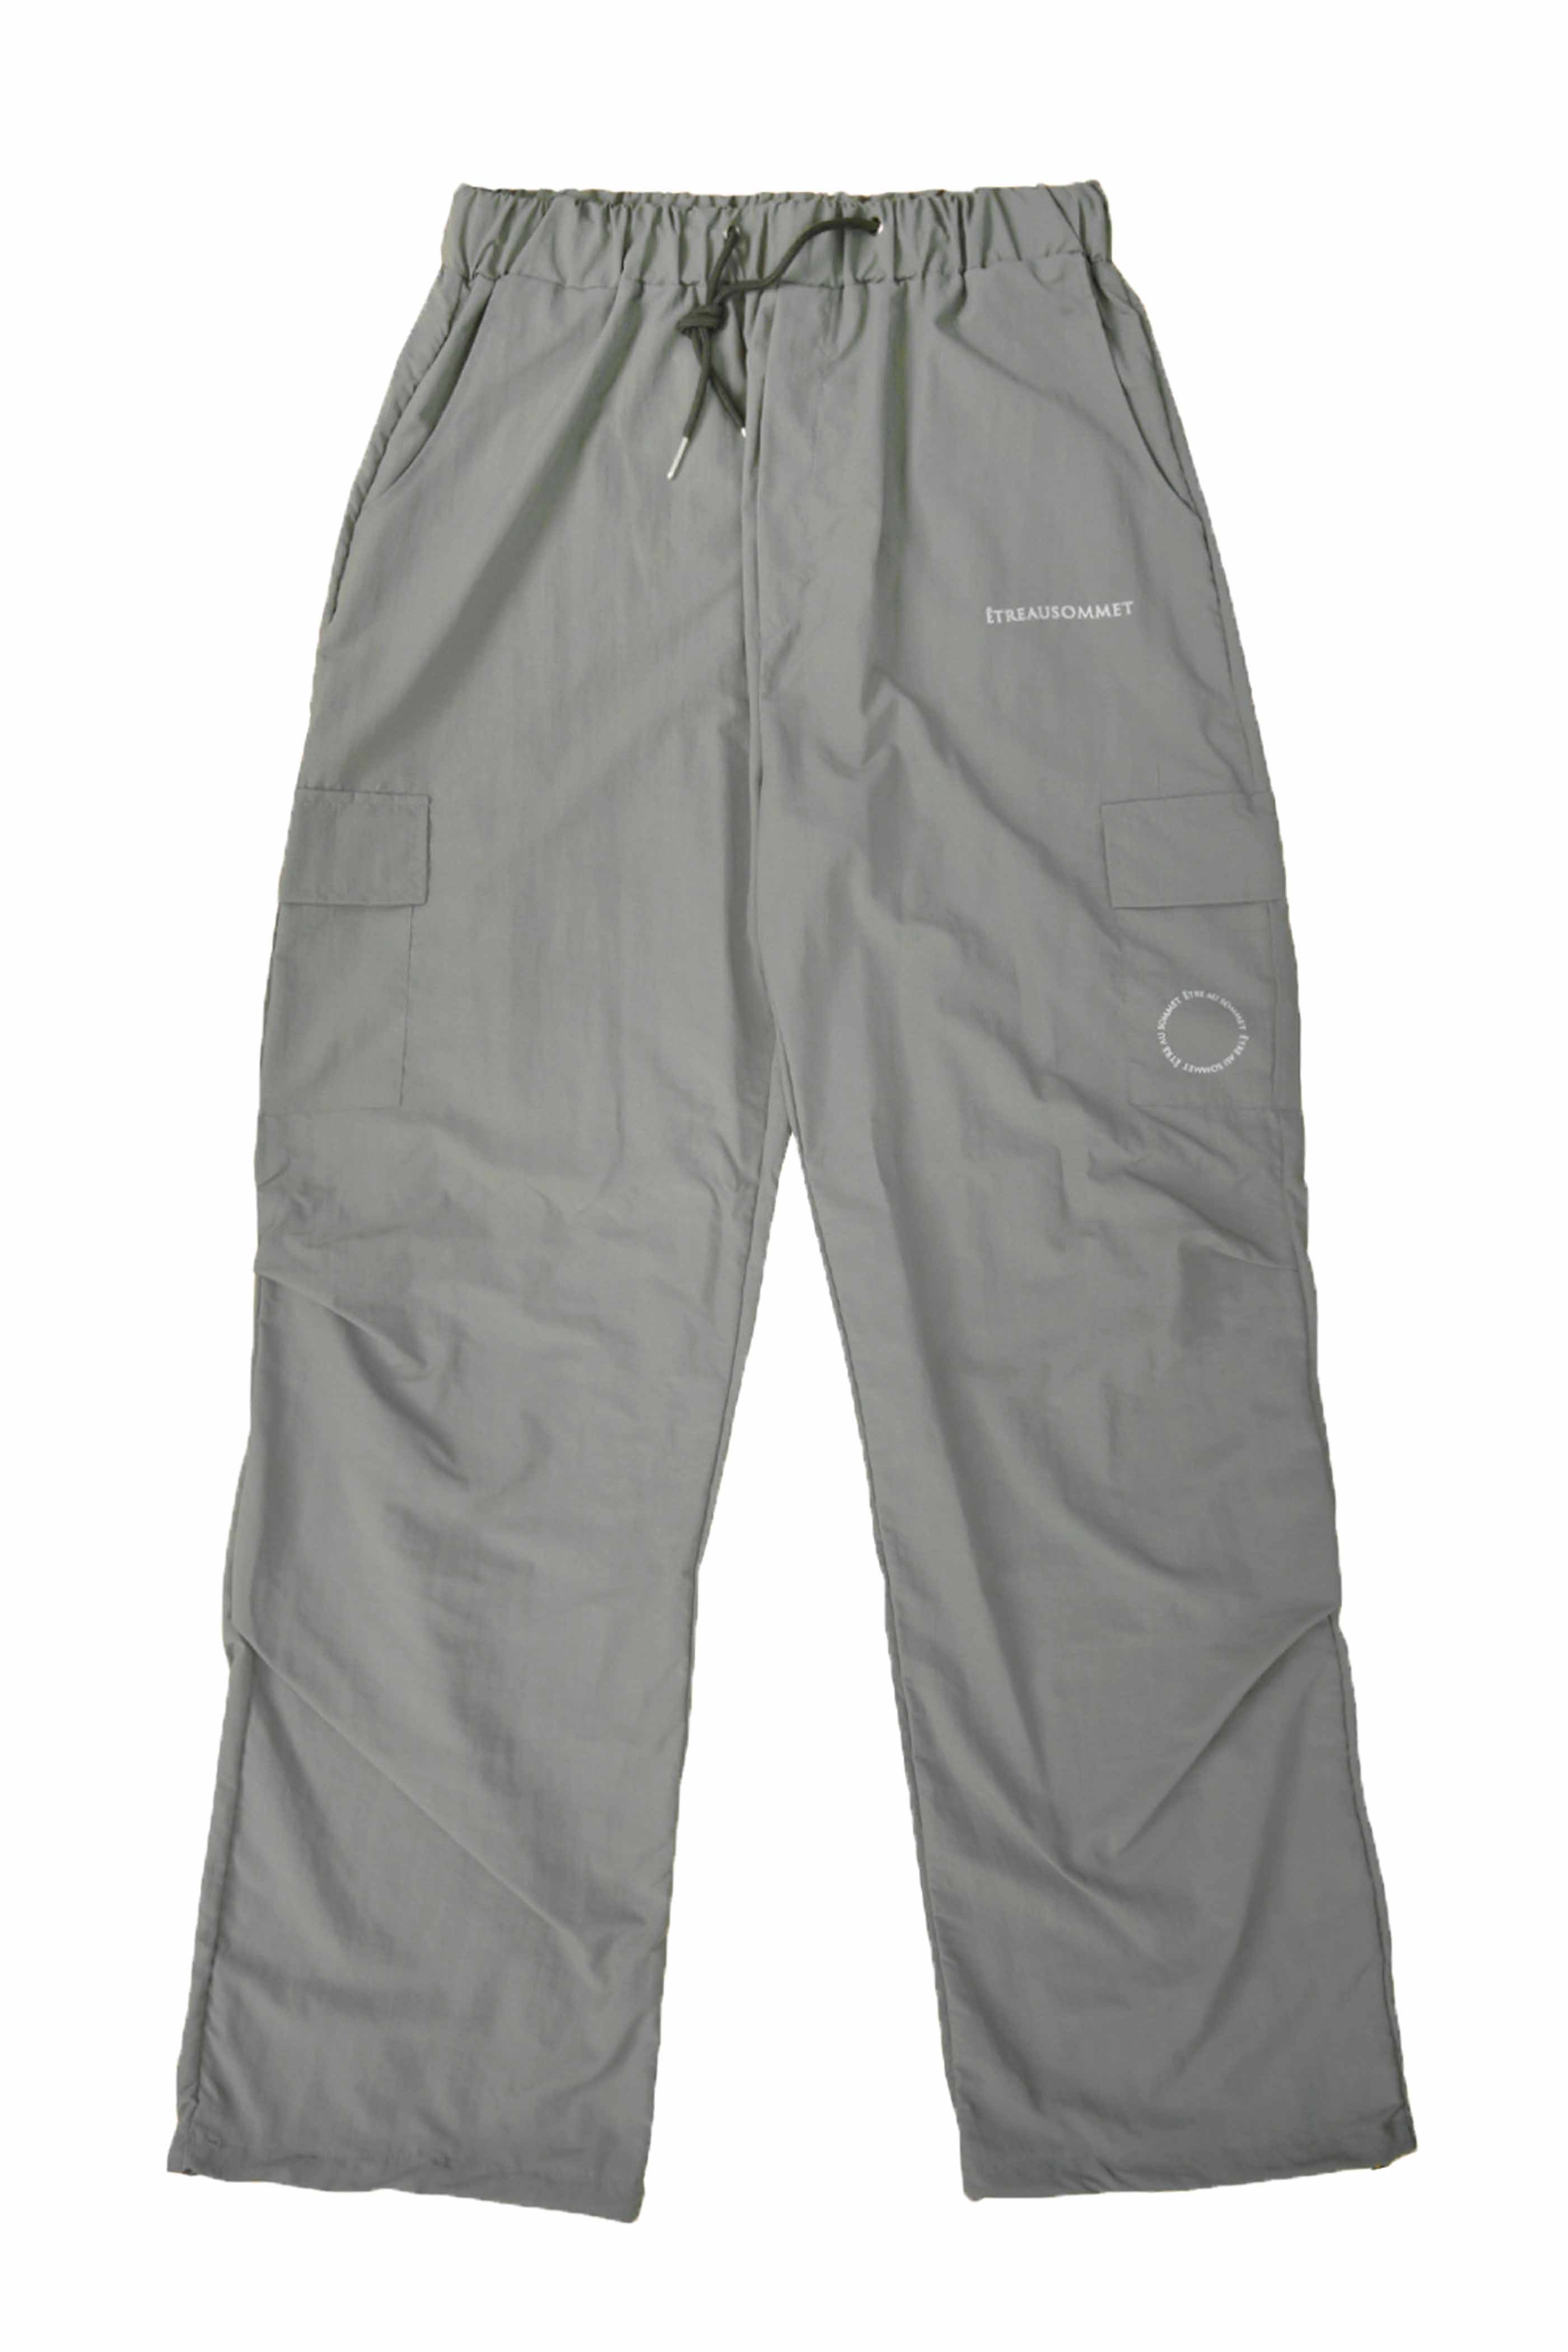 Nylon Cargo Long Pants (Khaki Gray) Unisex